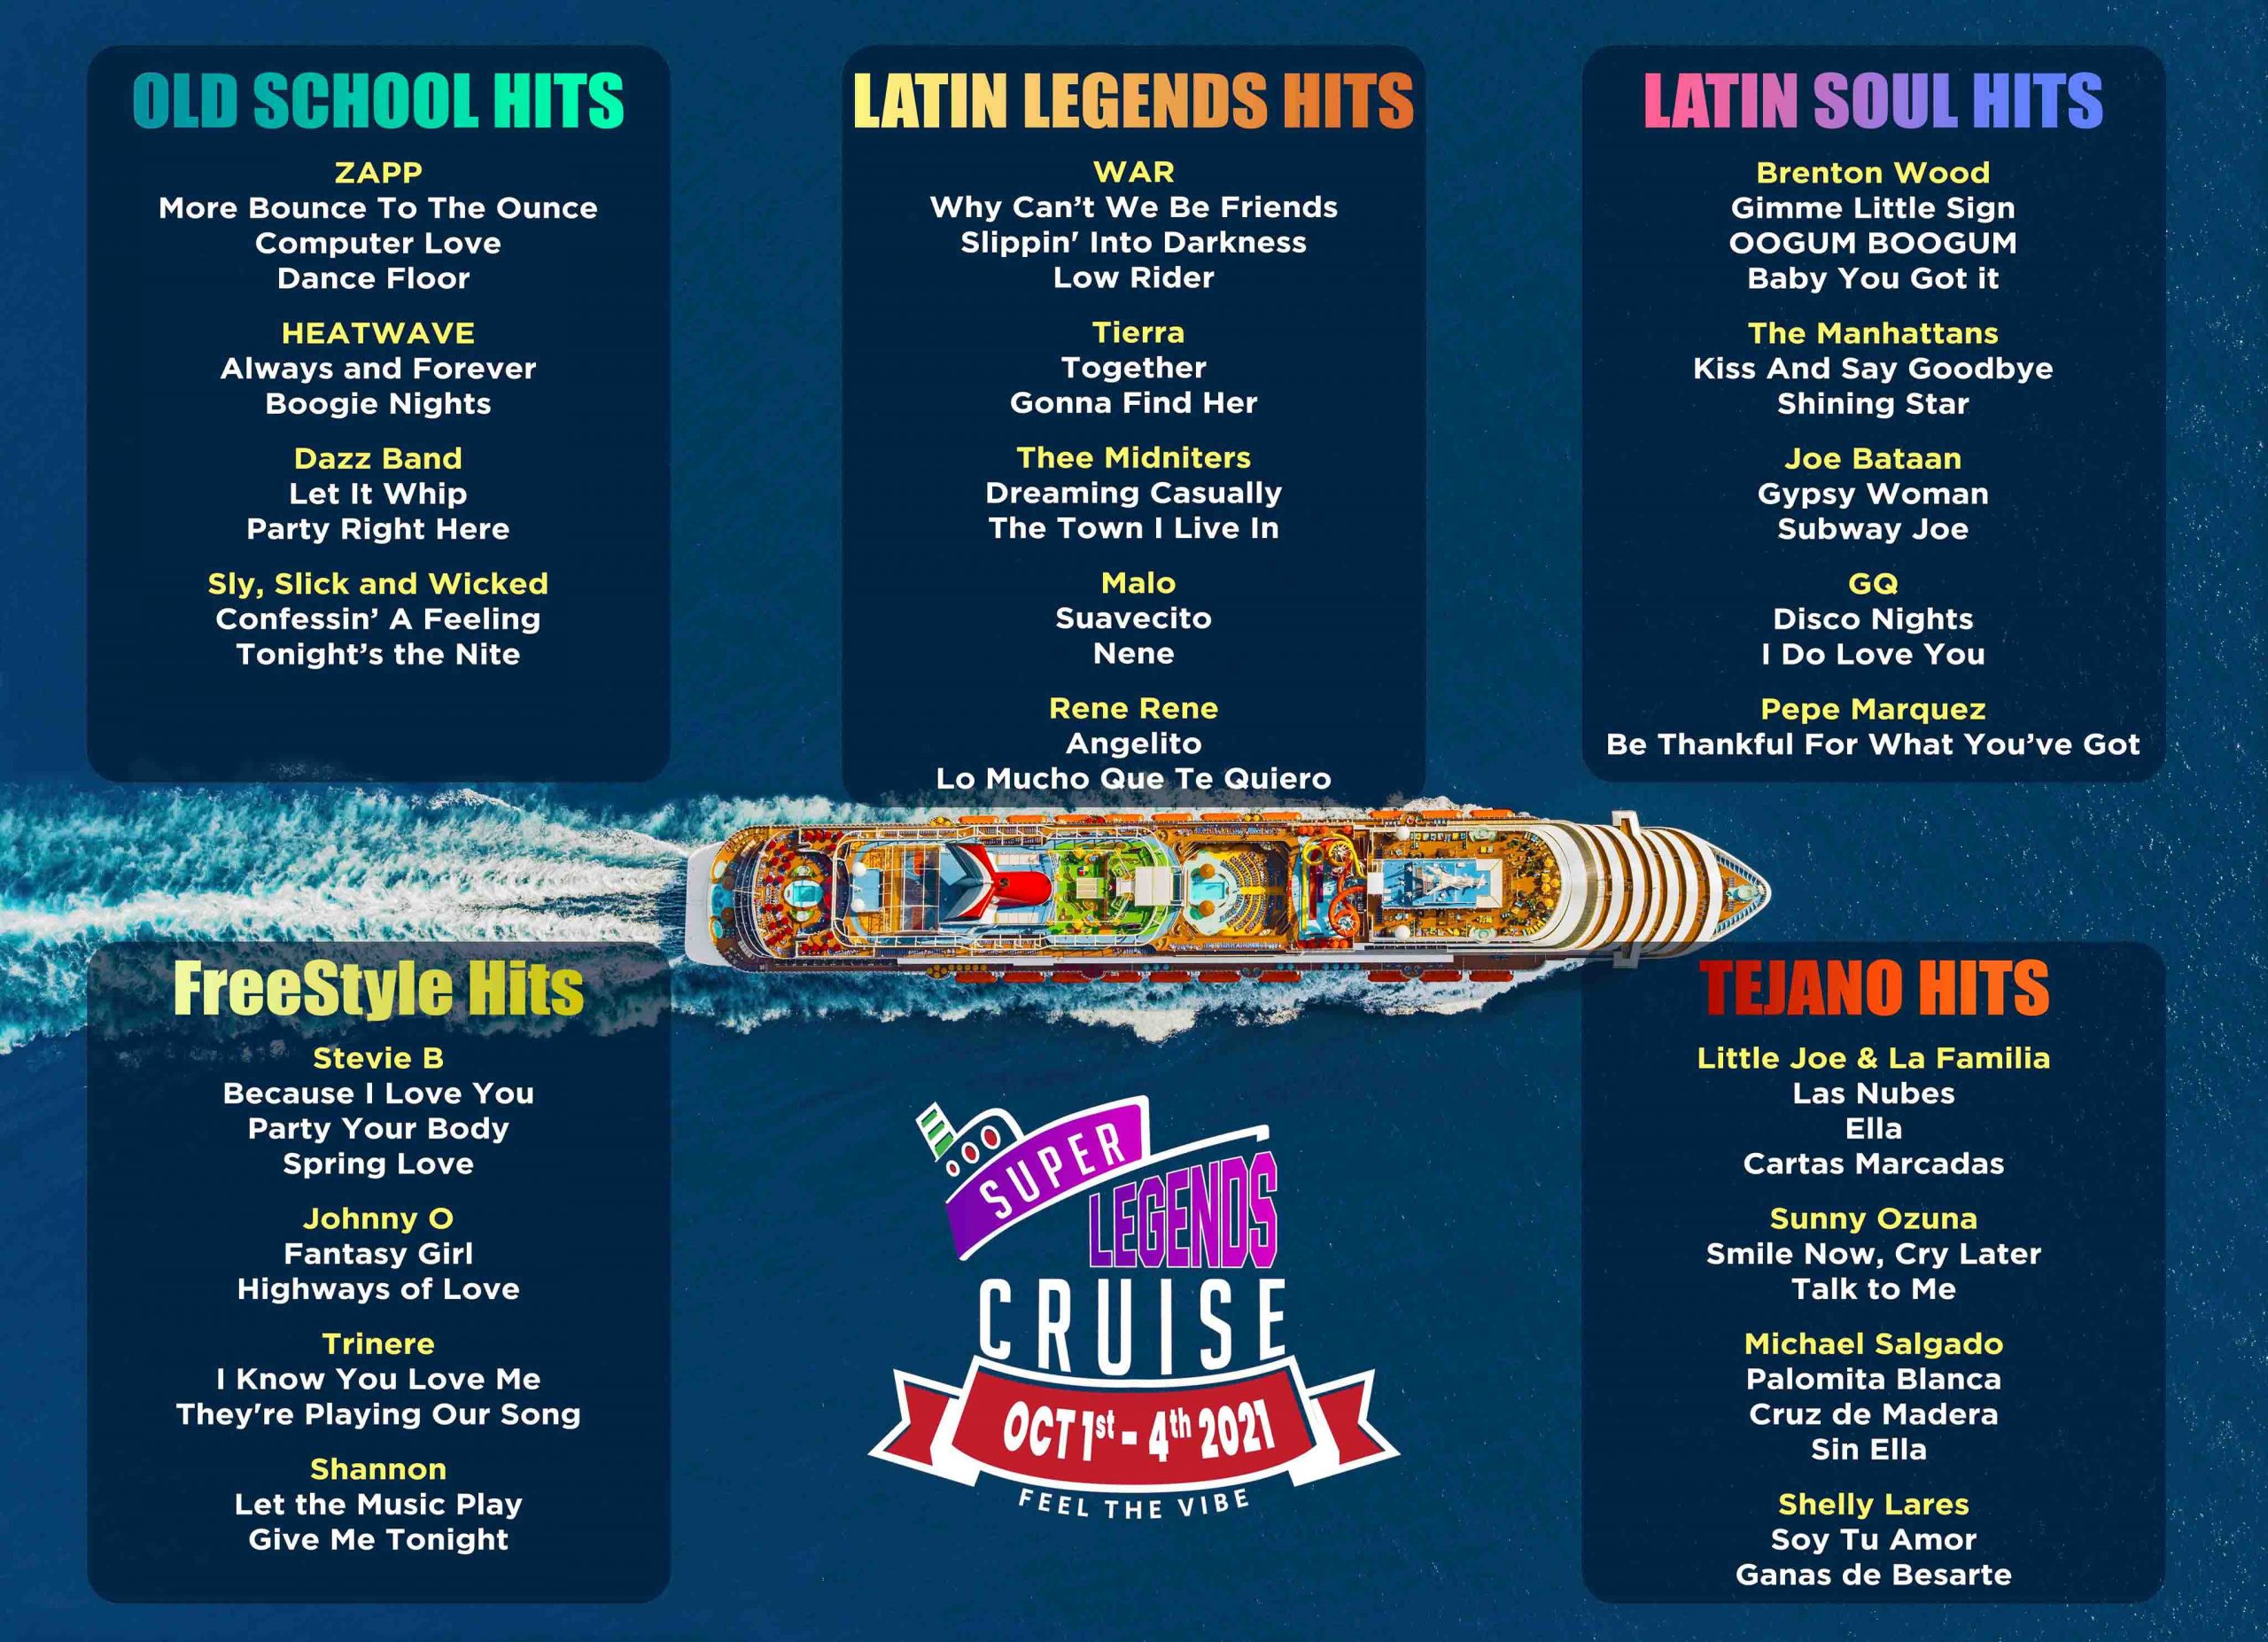 carnival cruise latin legends